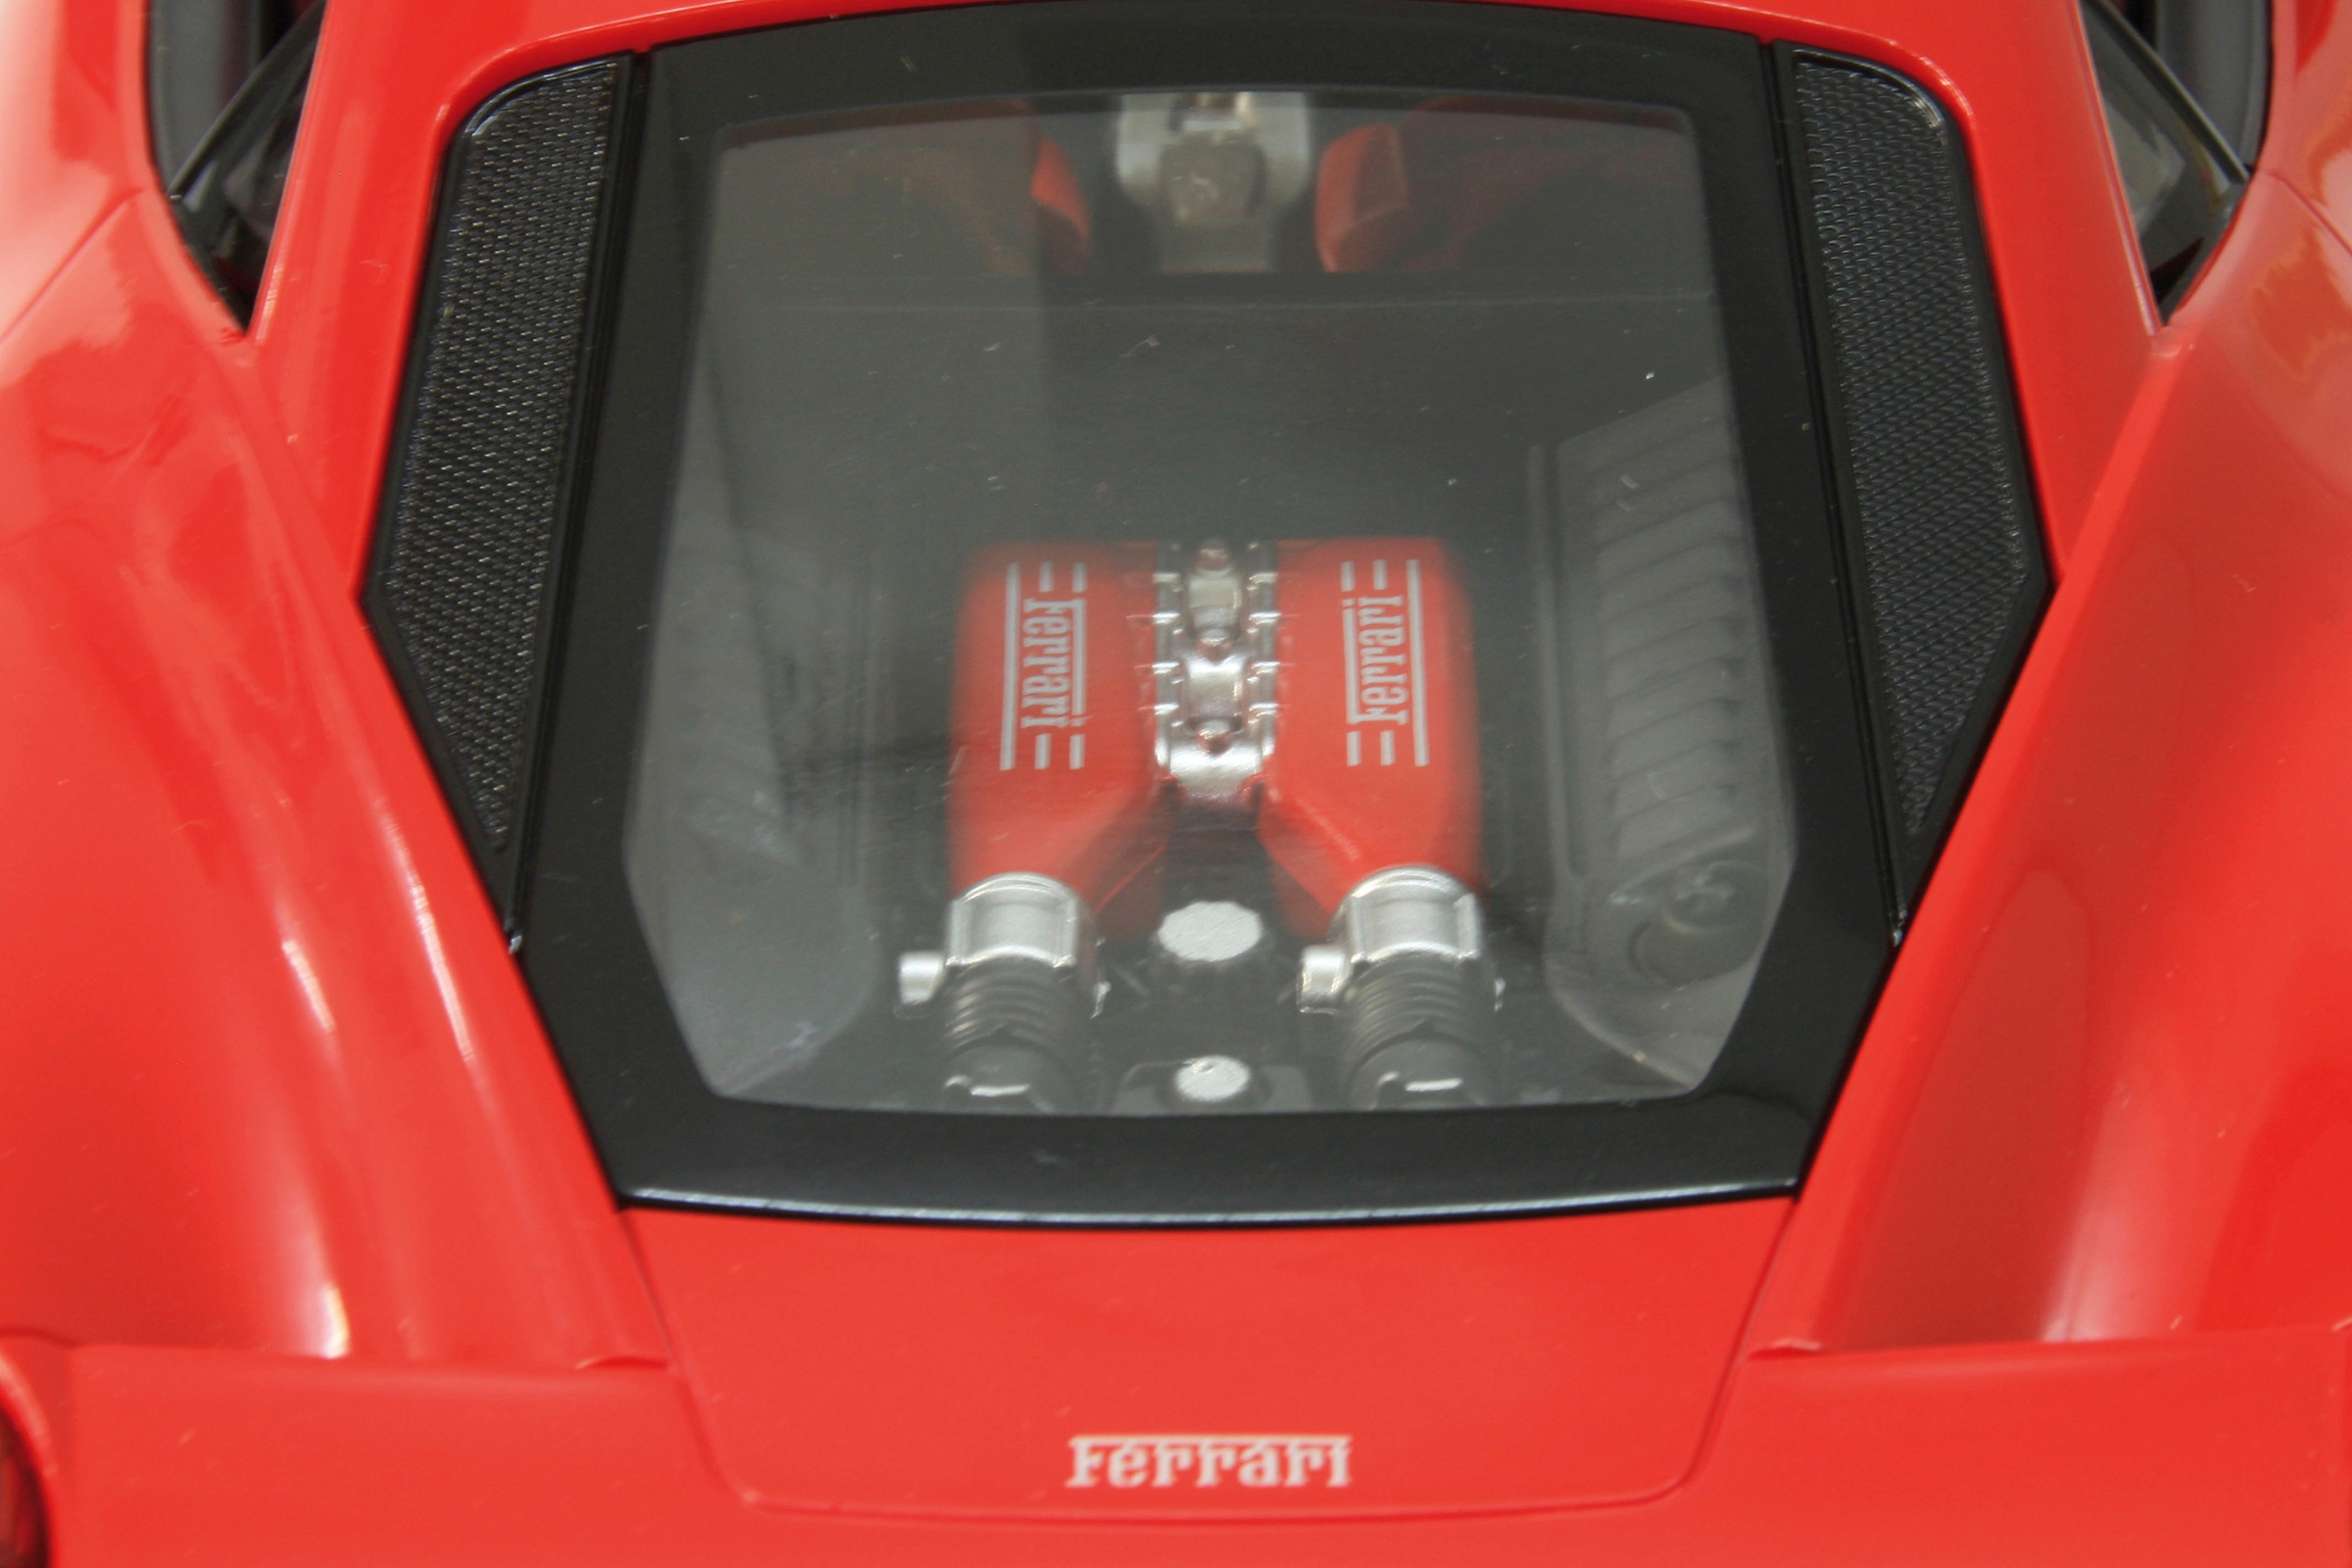 Jamara RC-Auto »Deluxe Cars, Ferrari 458 Italia, 1:14, rot, 2,4GHz«, mit LED-Licht